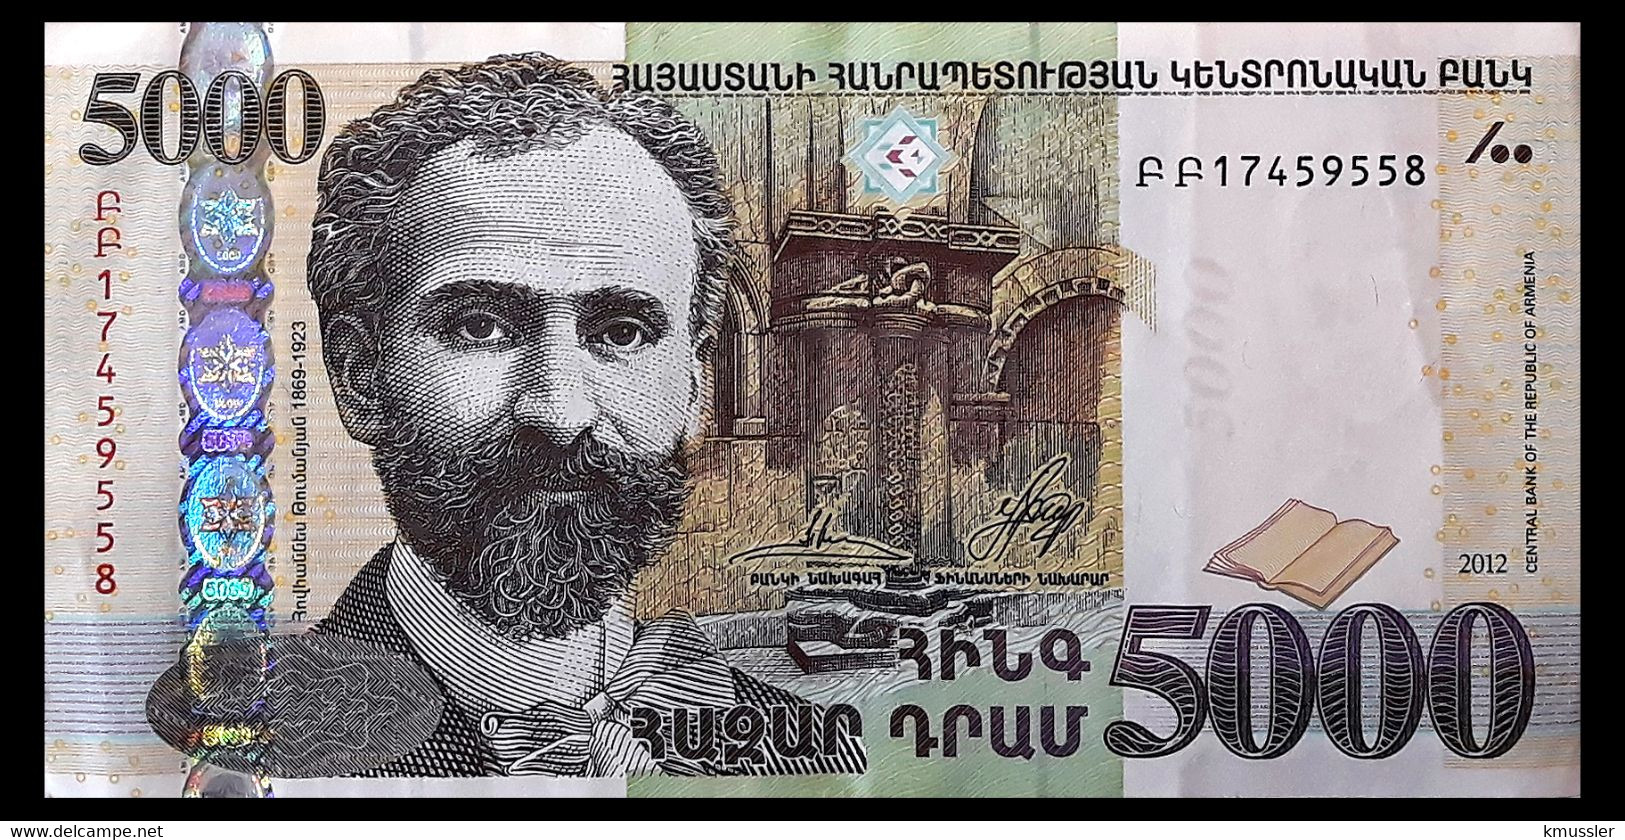 # # # Banknote Aus Armenien 5.000 Dram # # # - Armenia